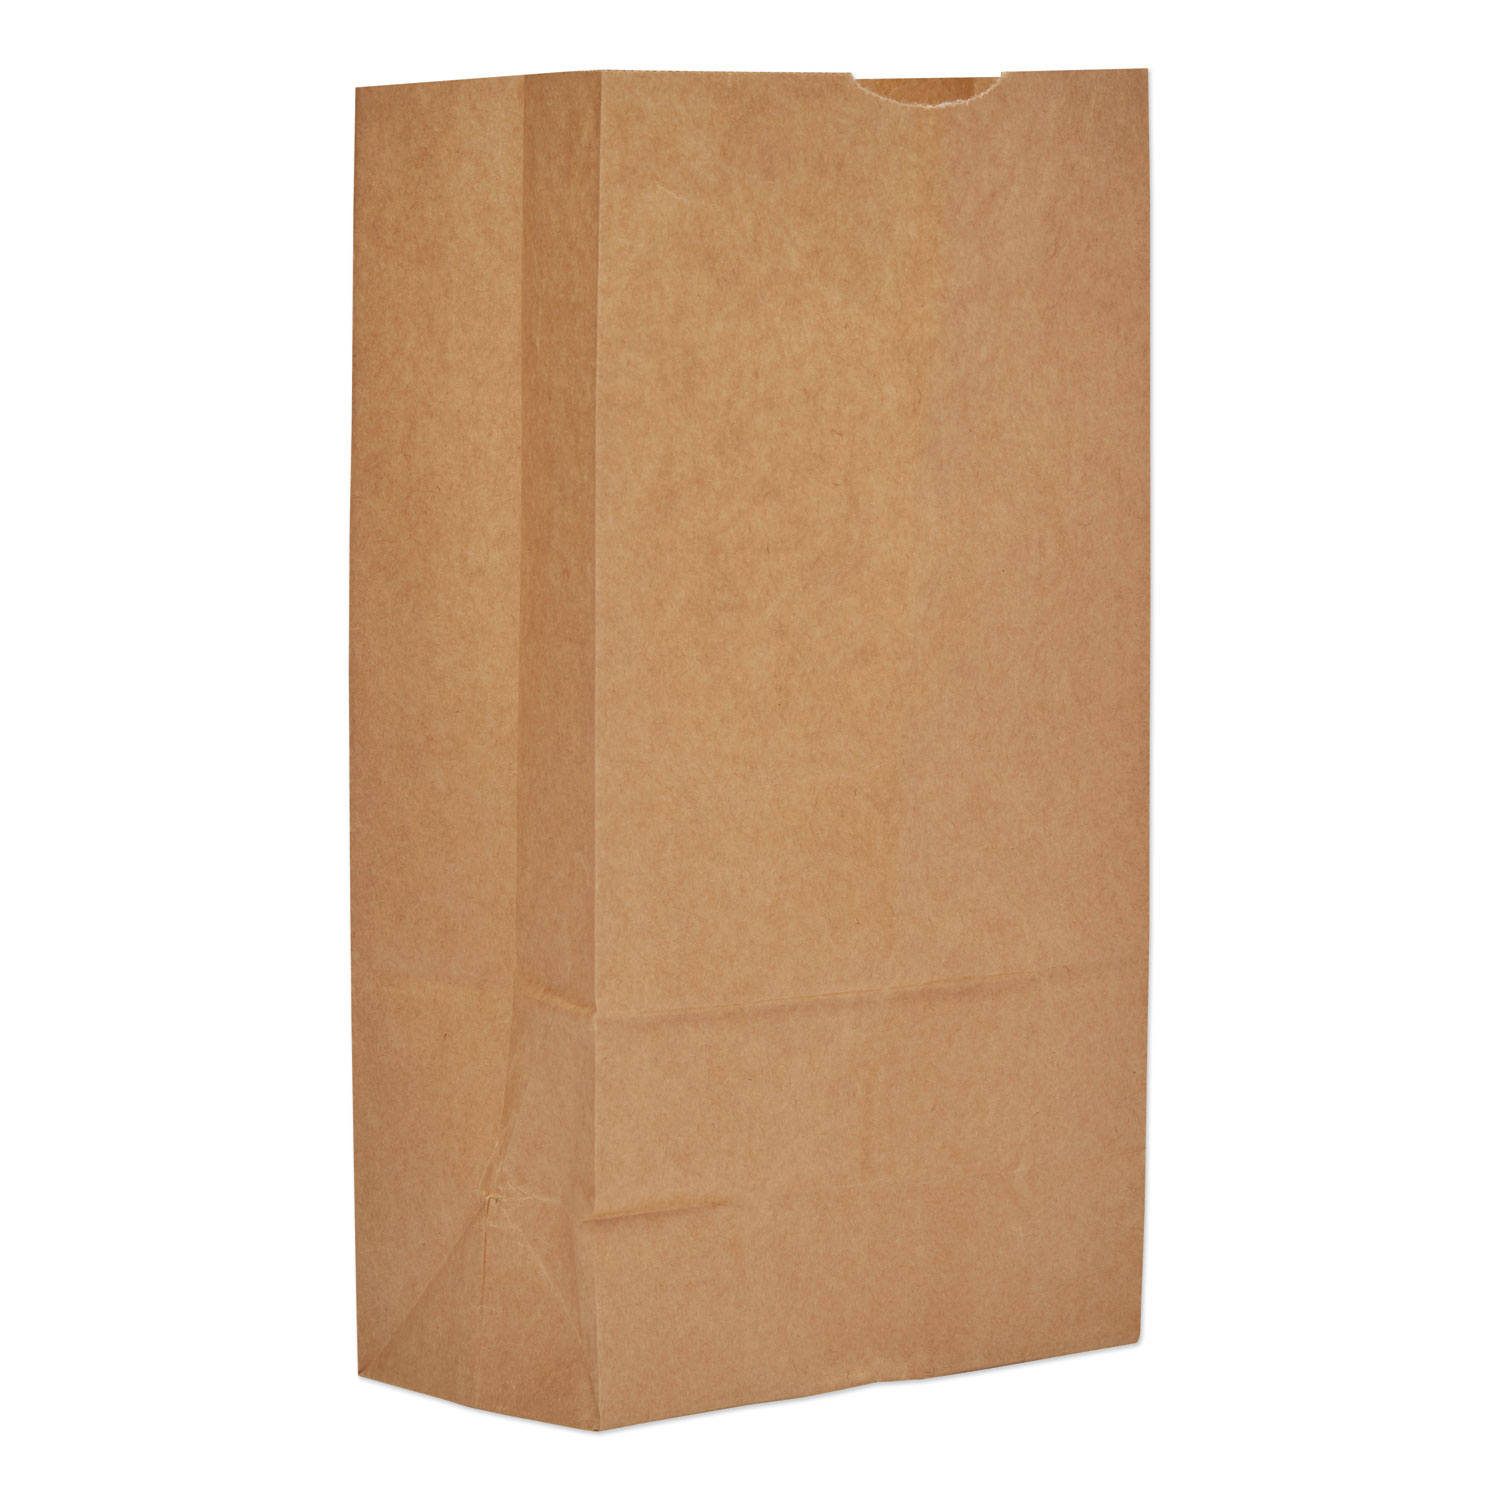  General GB12NP1M Grocery Paper Bags, 12 lbs Capacity, #12, 7.06w x 4.5d x 12.75h, Kraft, 1,000 Bags (BAGGK12) 